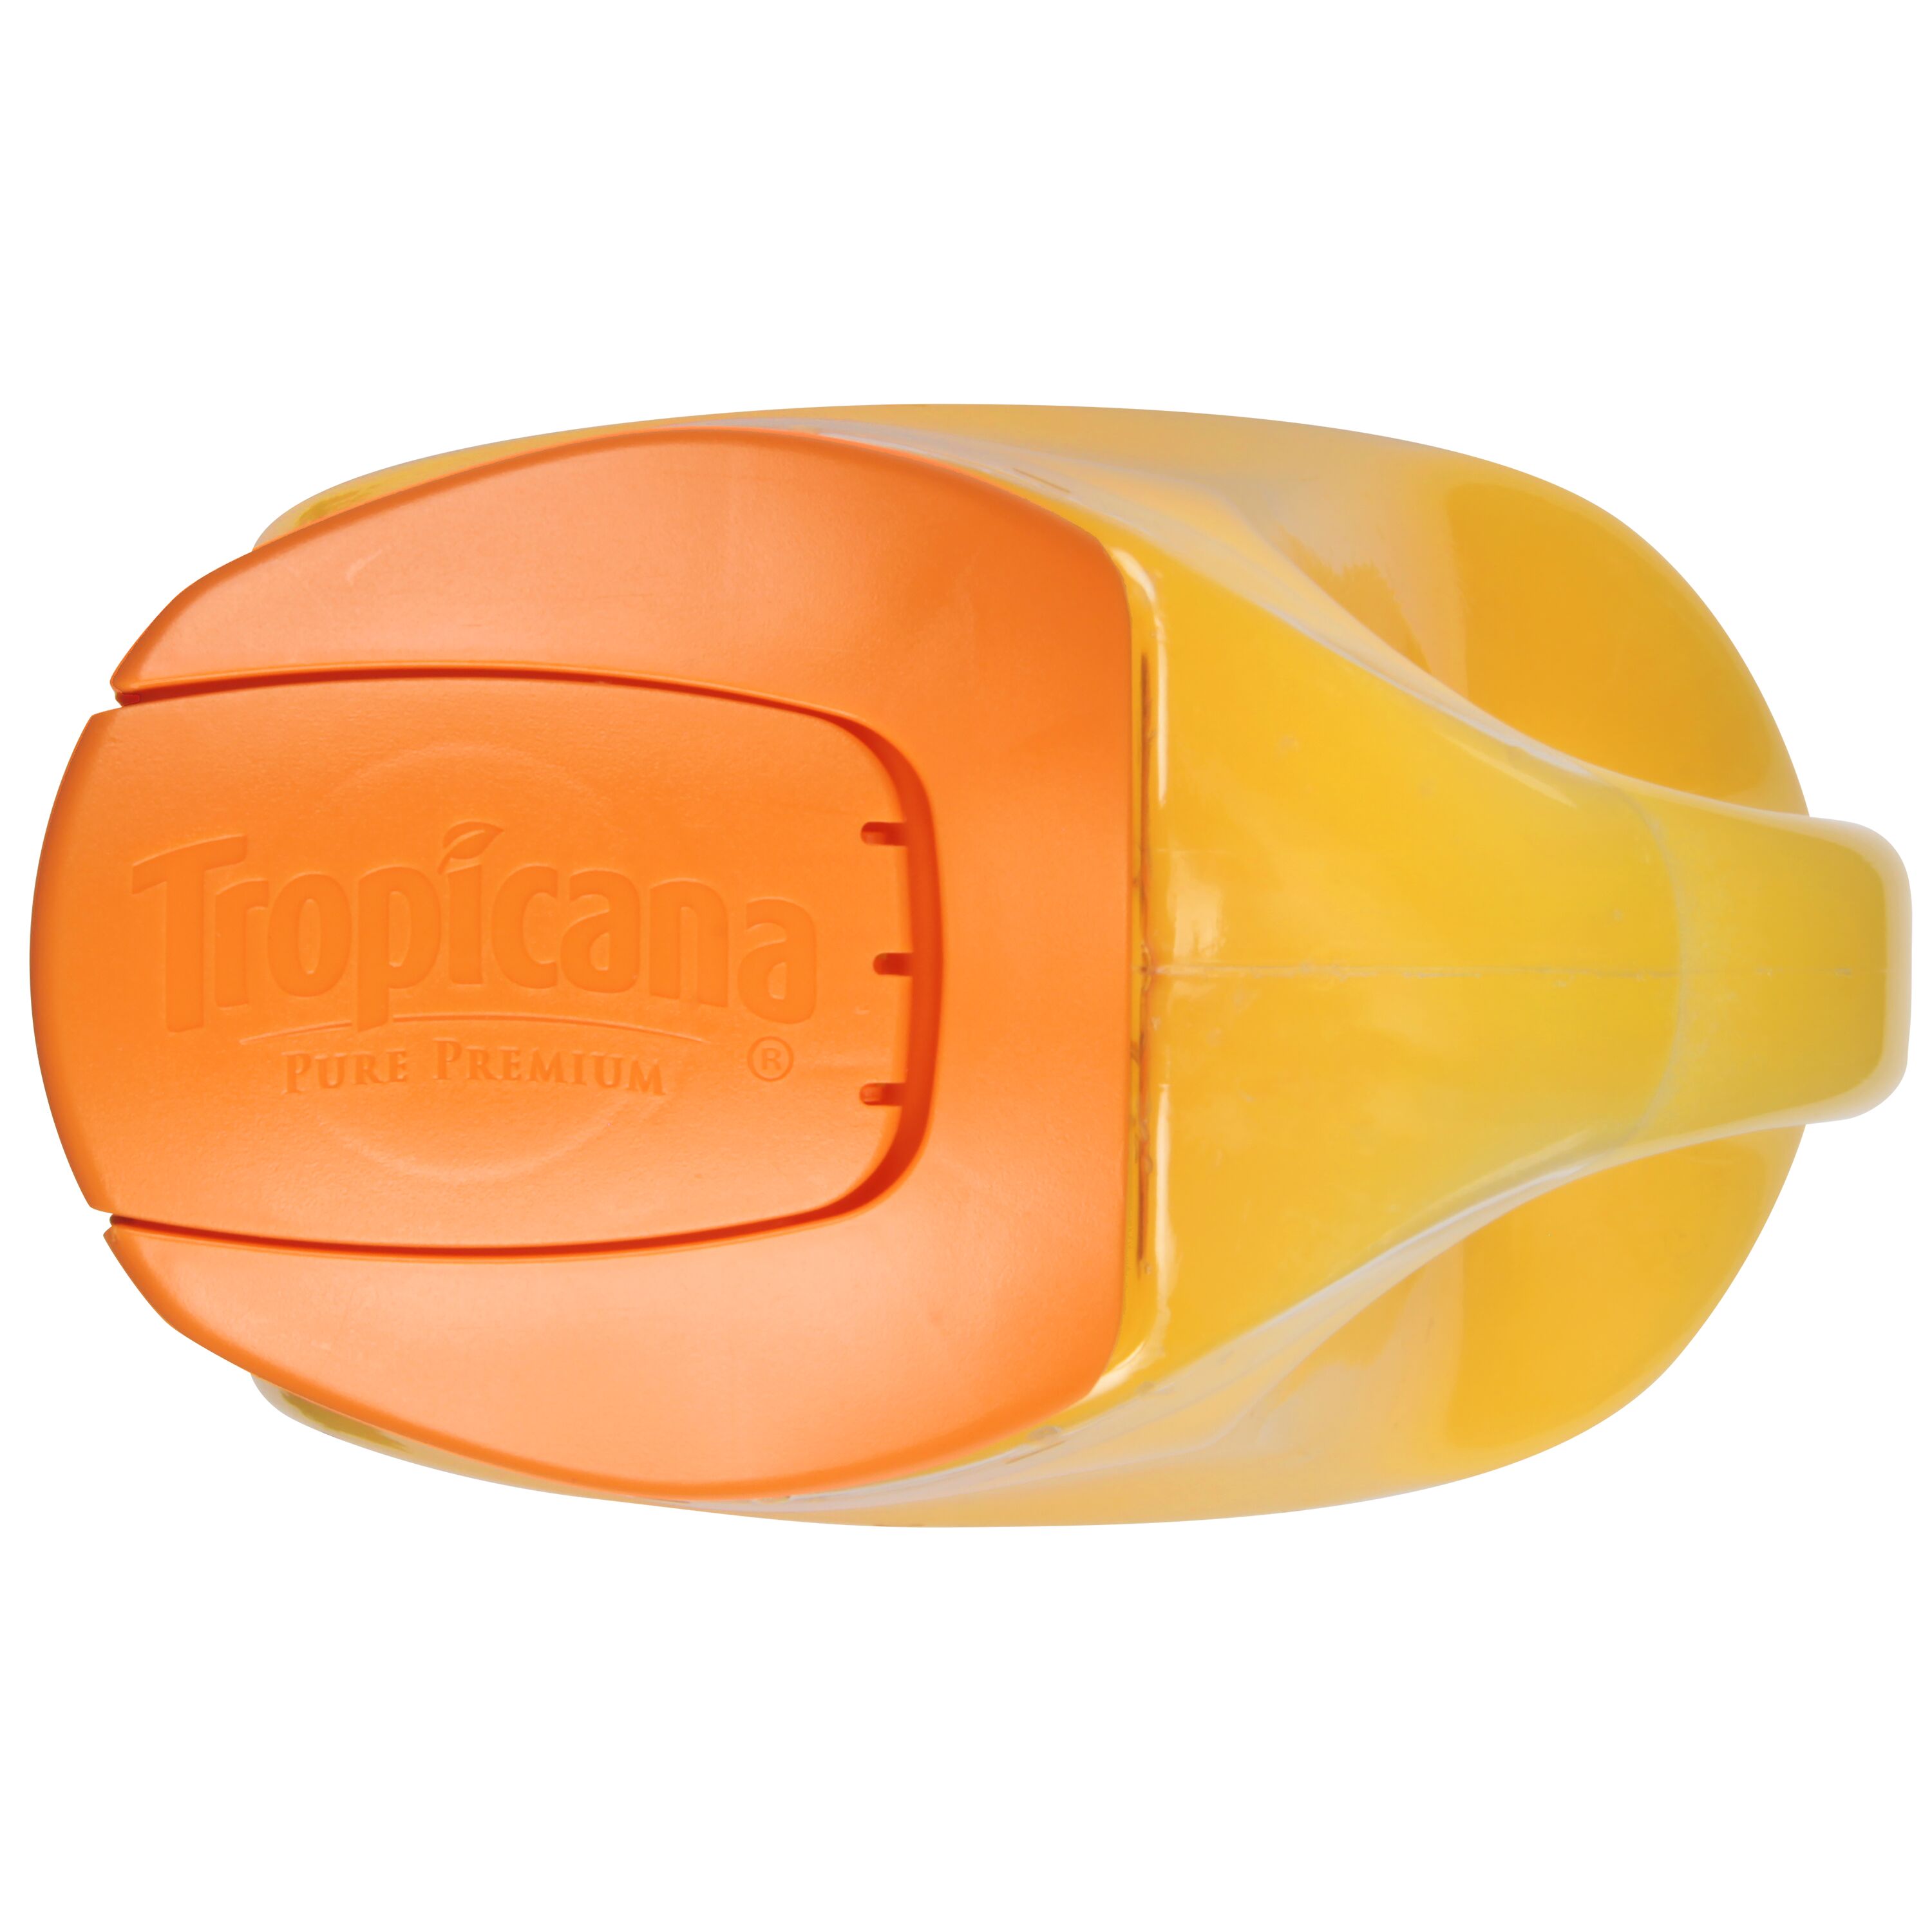 Tropicana Pure Premium, Homestyle Some Pulp 100% Orange Juice Drink, 89 fl oz Jug - image 5 of 8